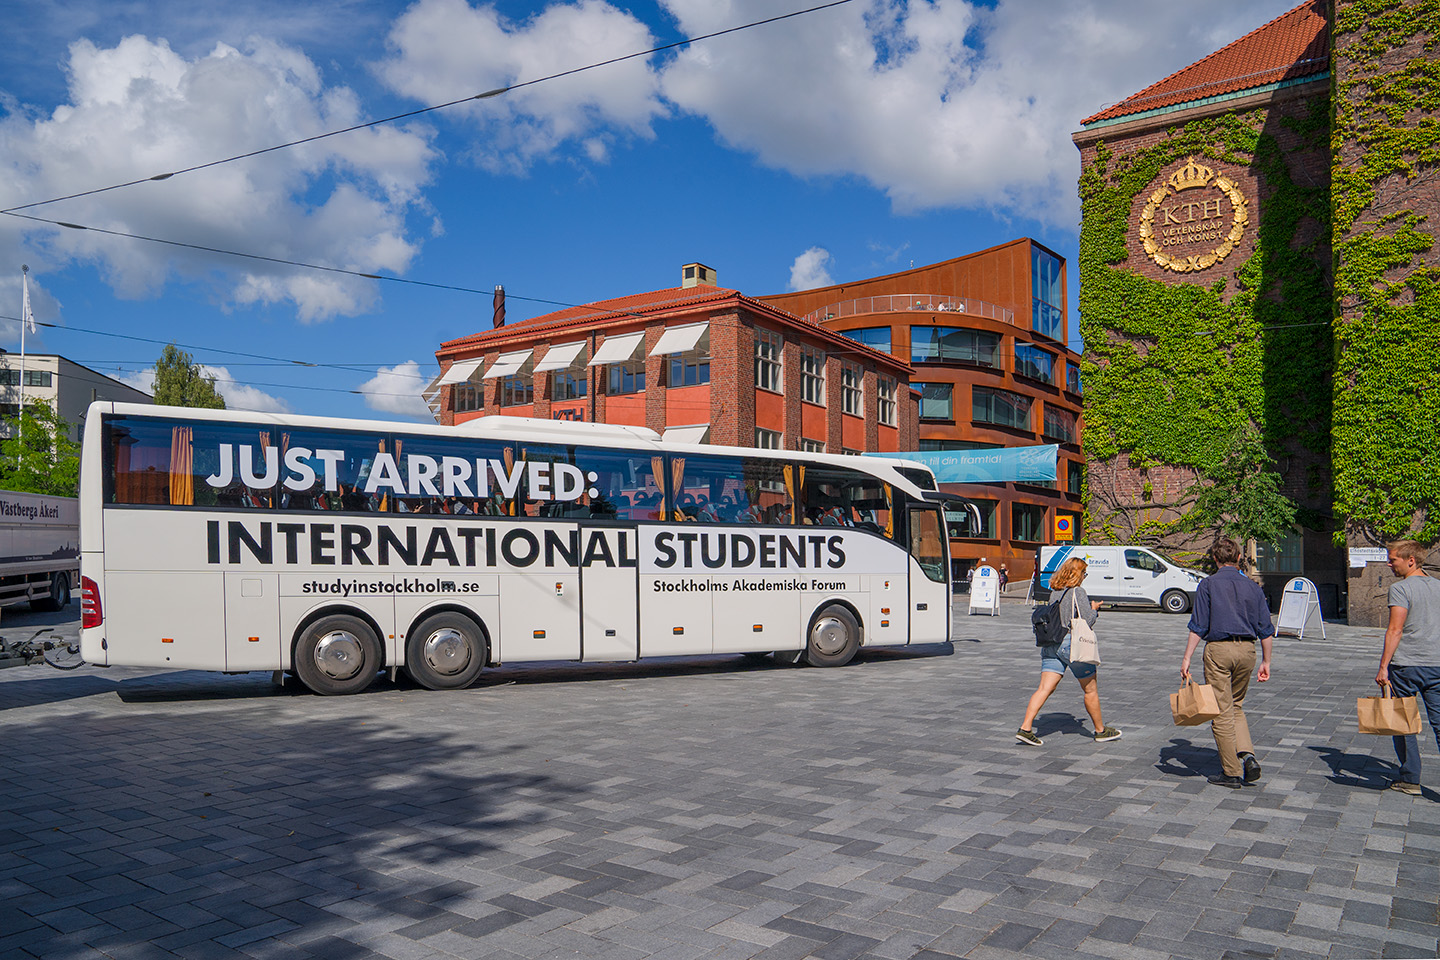 Arrival bus for international students at KTh Entré.